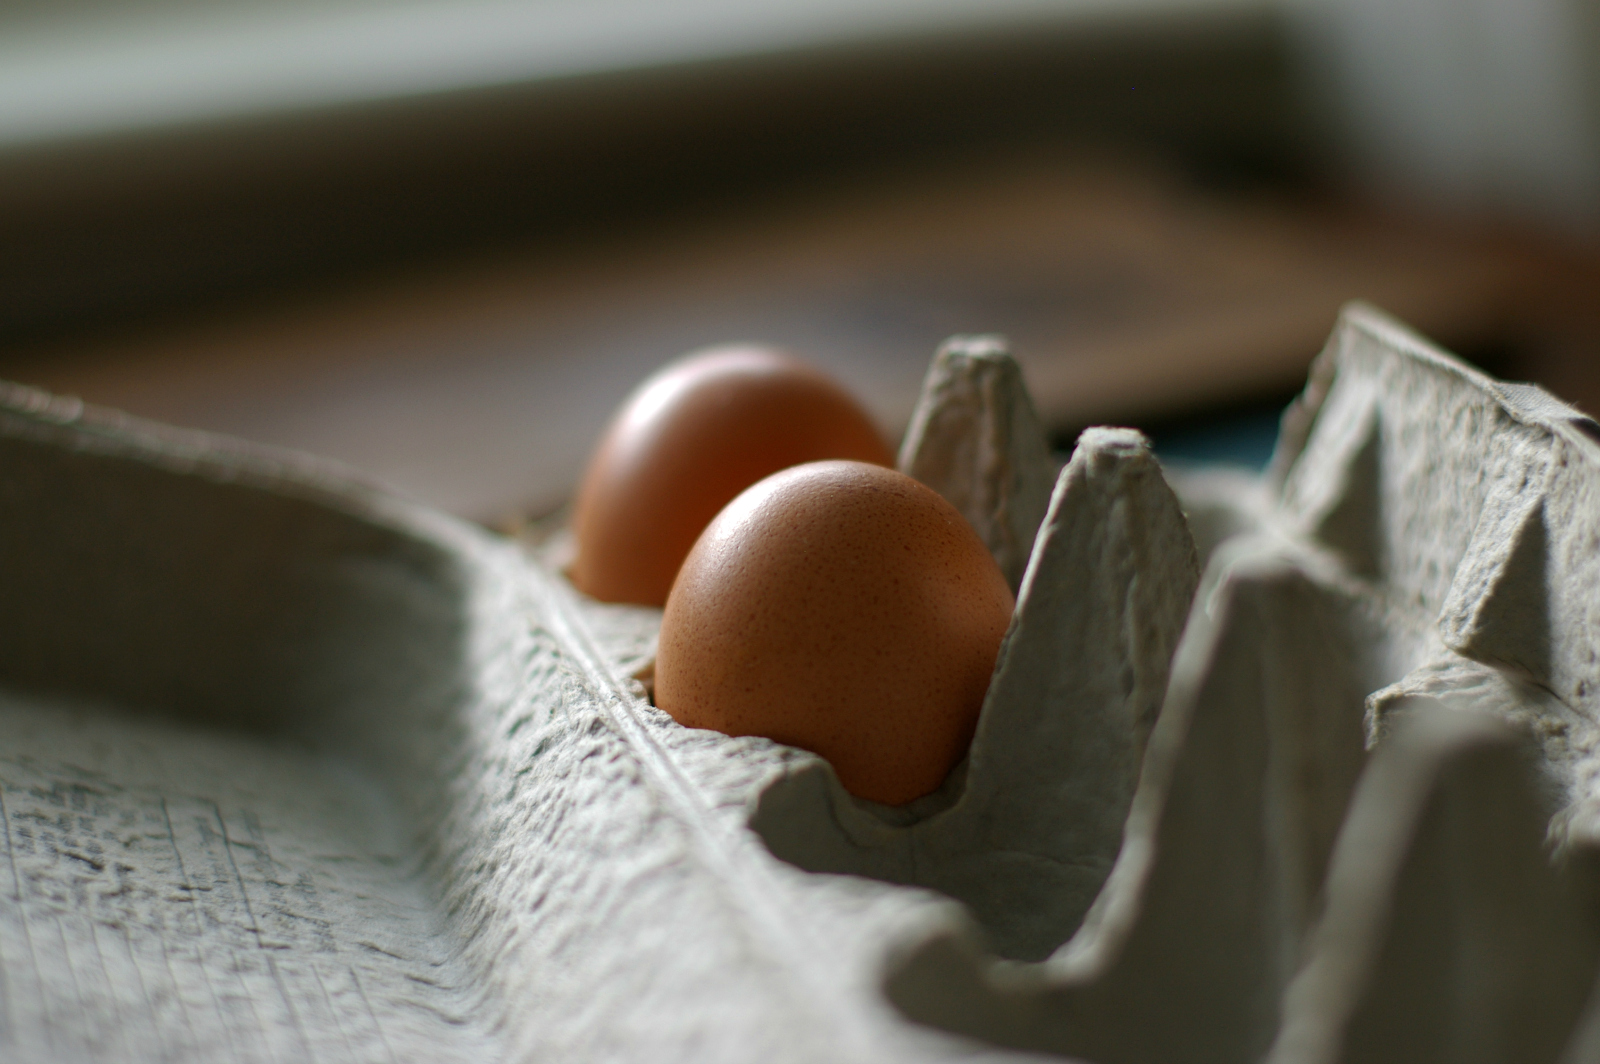 Day 15 – Eggs